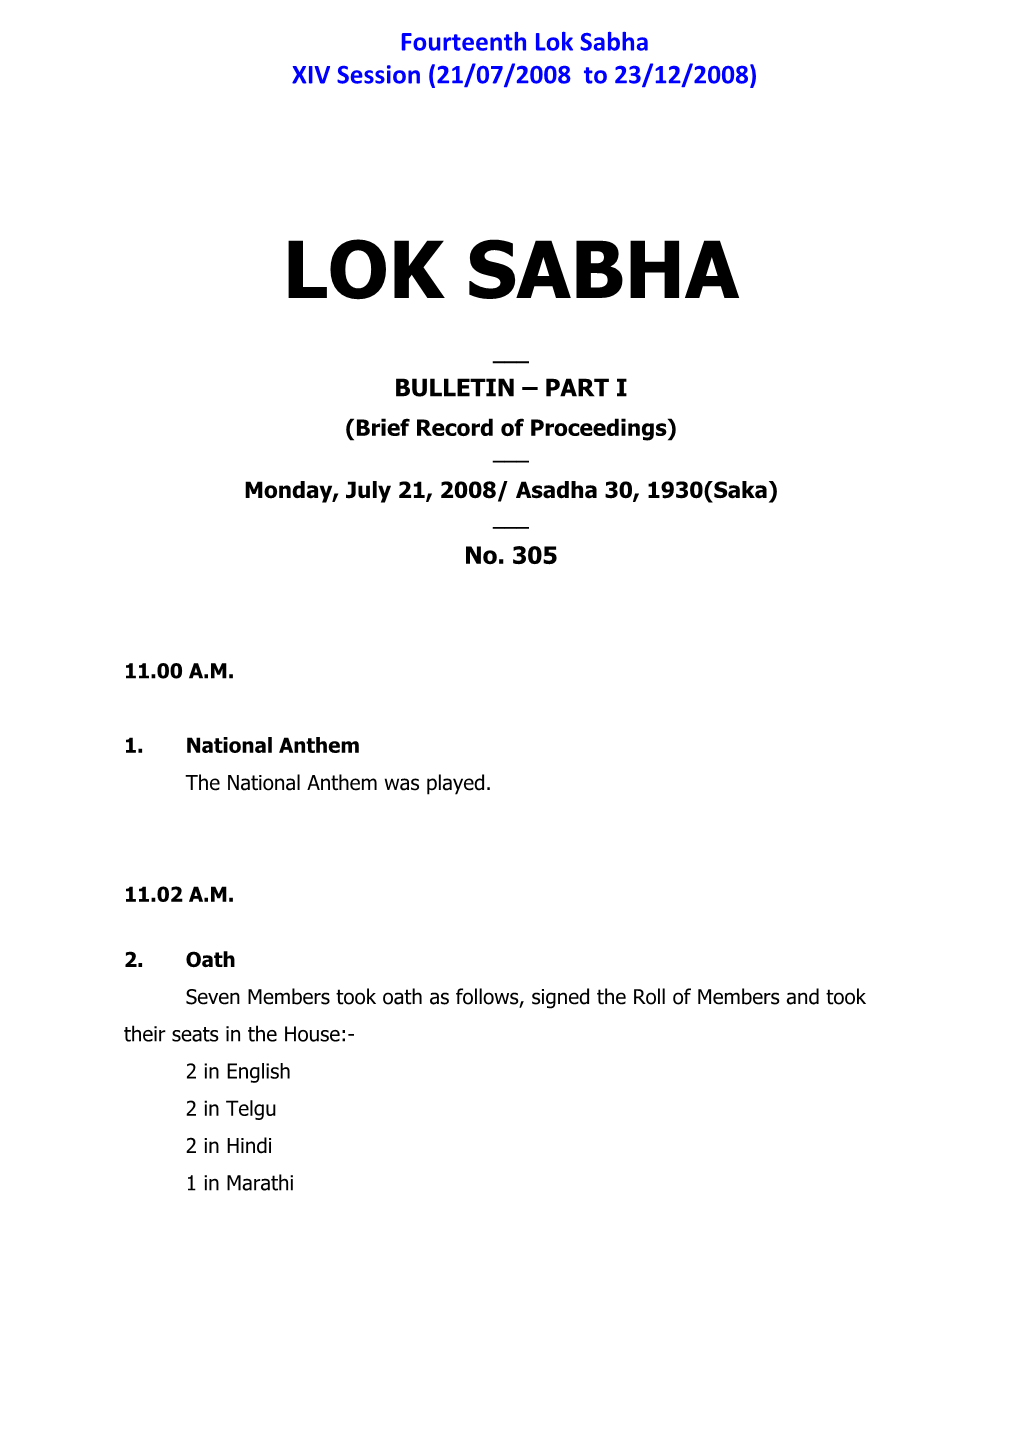 Lok Sabha XIV Session (21/07/2008 to 23/12/2008)